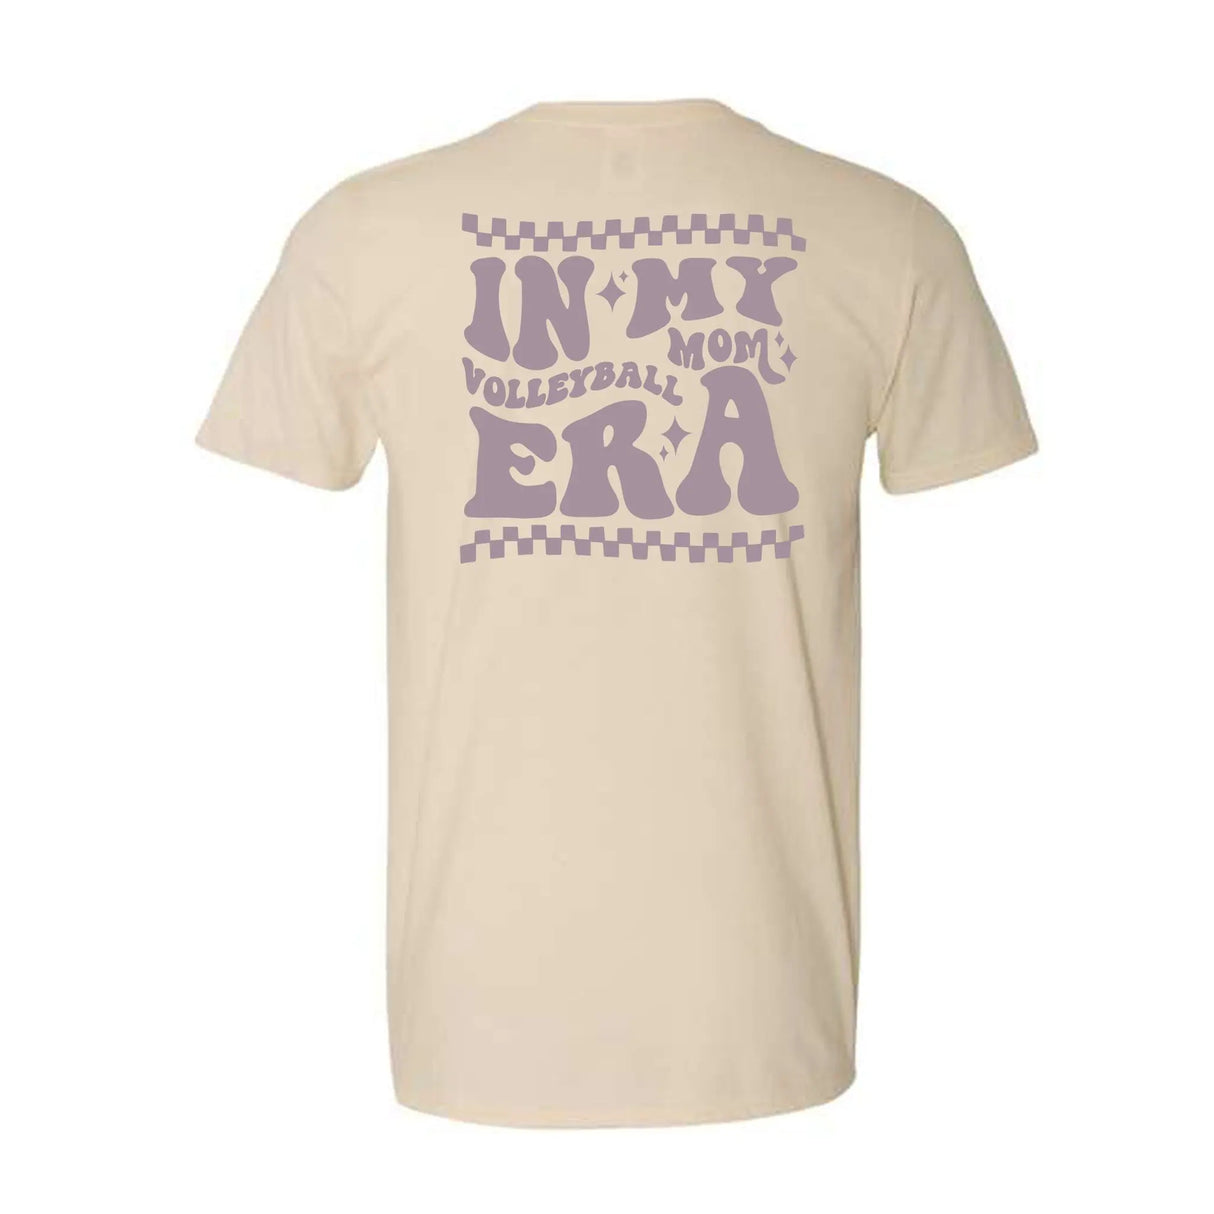 Volleyball Mom Era T-Shirt - Cream S&S Activewear